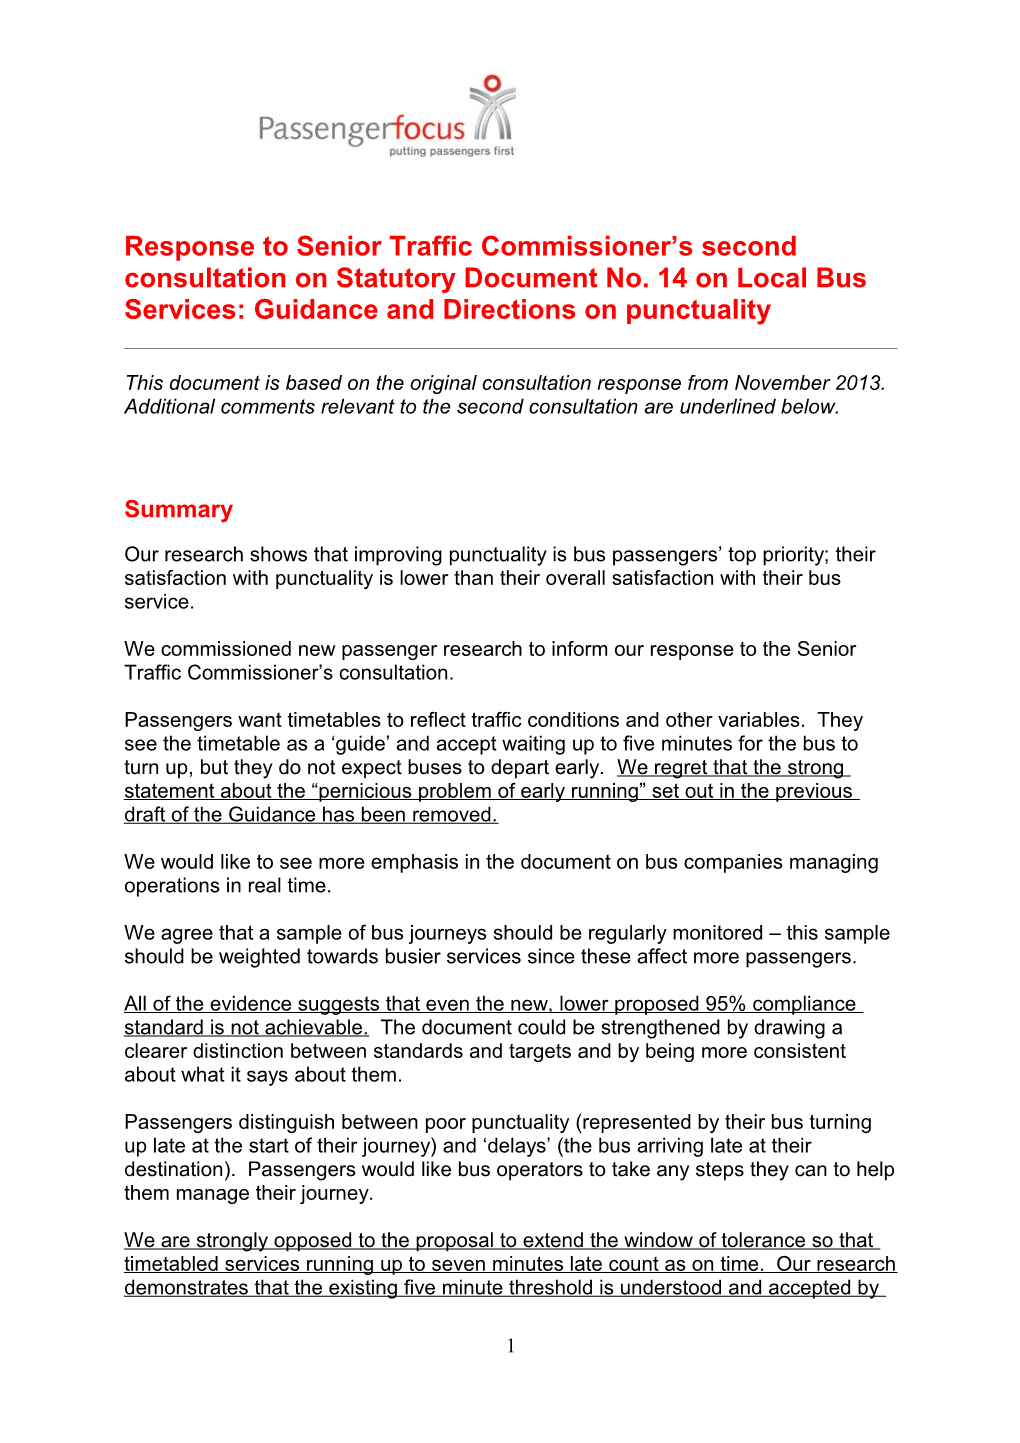 Response to Senior Traffic Commissioner S Second Consultation on Statutory Document No